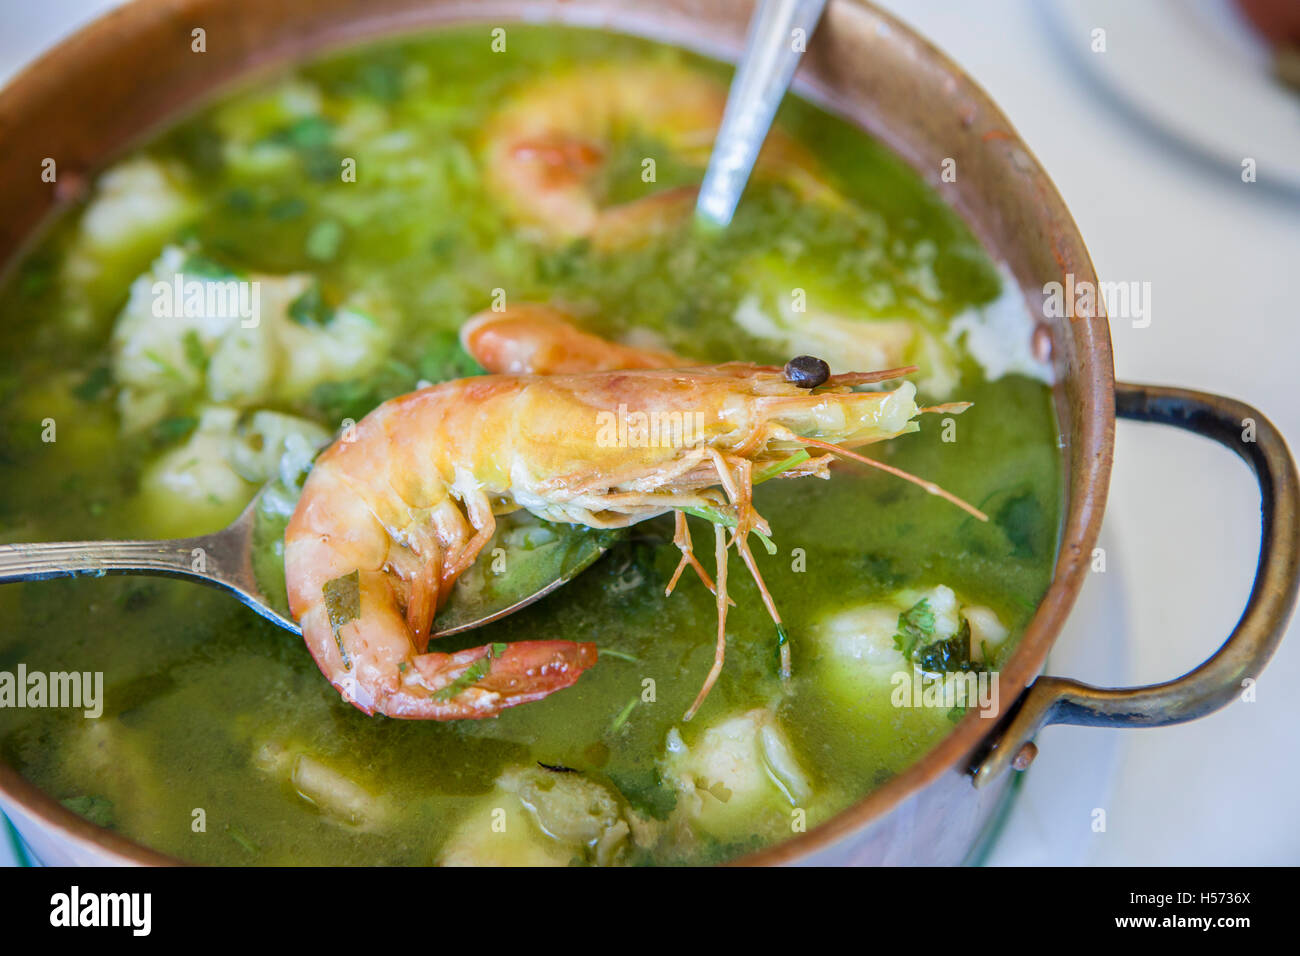 Arroz de Tamboril or soupy seafood rice, portuguese recipe. Spoon holding a prawn Stock Photo